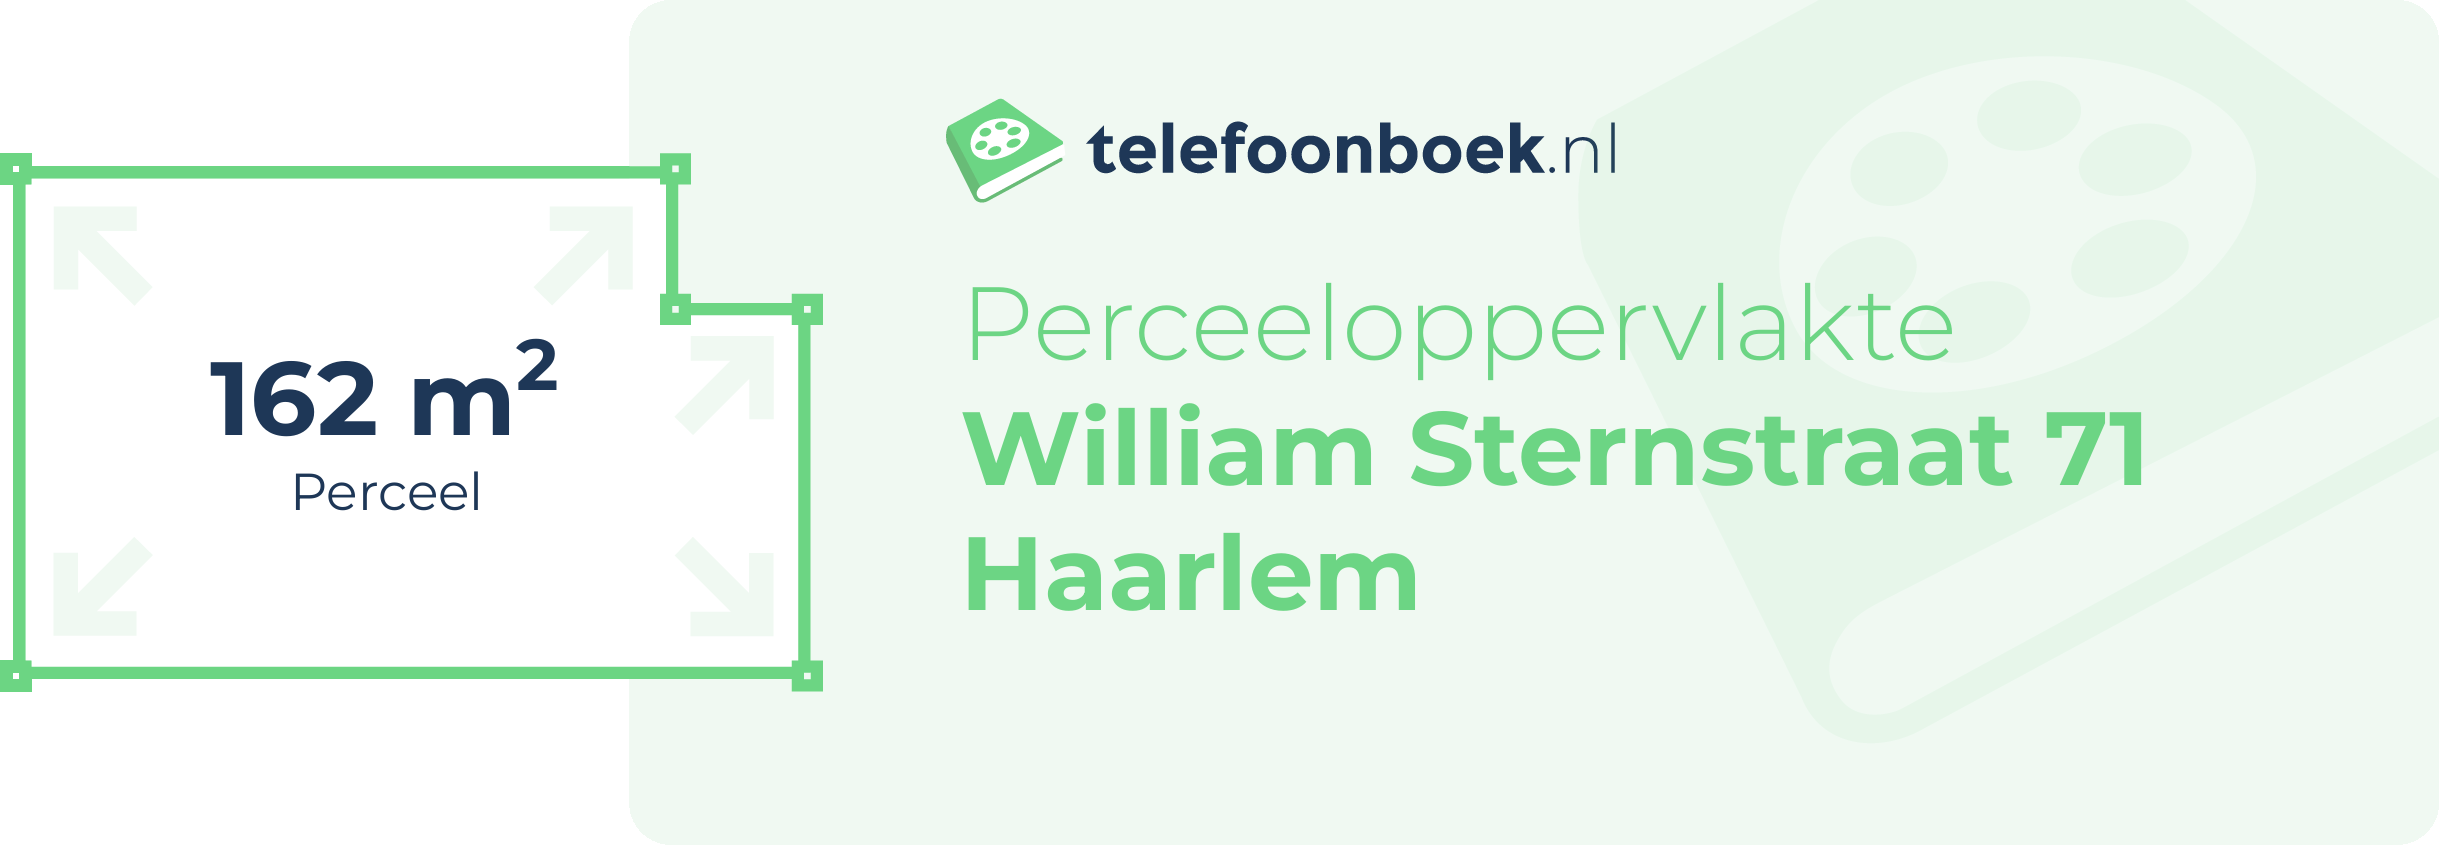 Perceeloppervlakte William Sternstraat 71 Haarlem